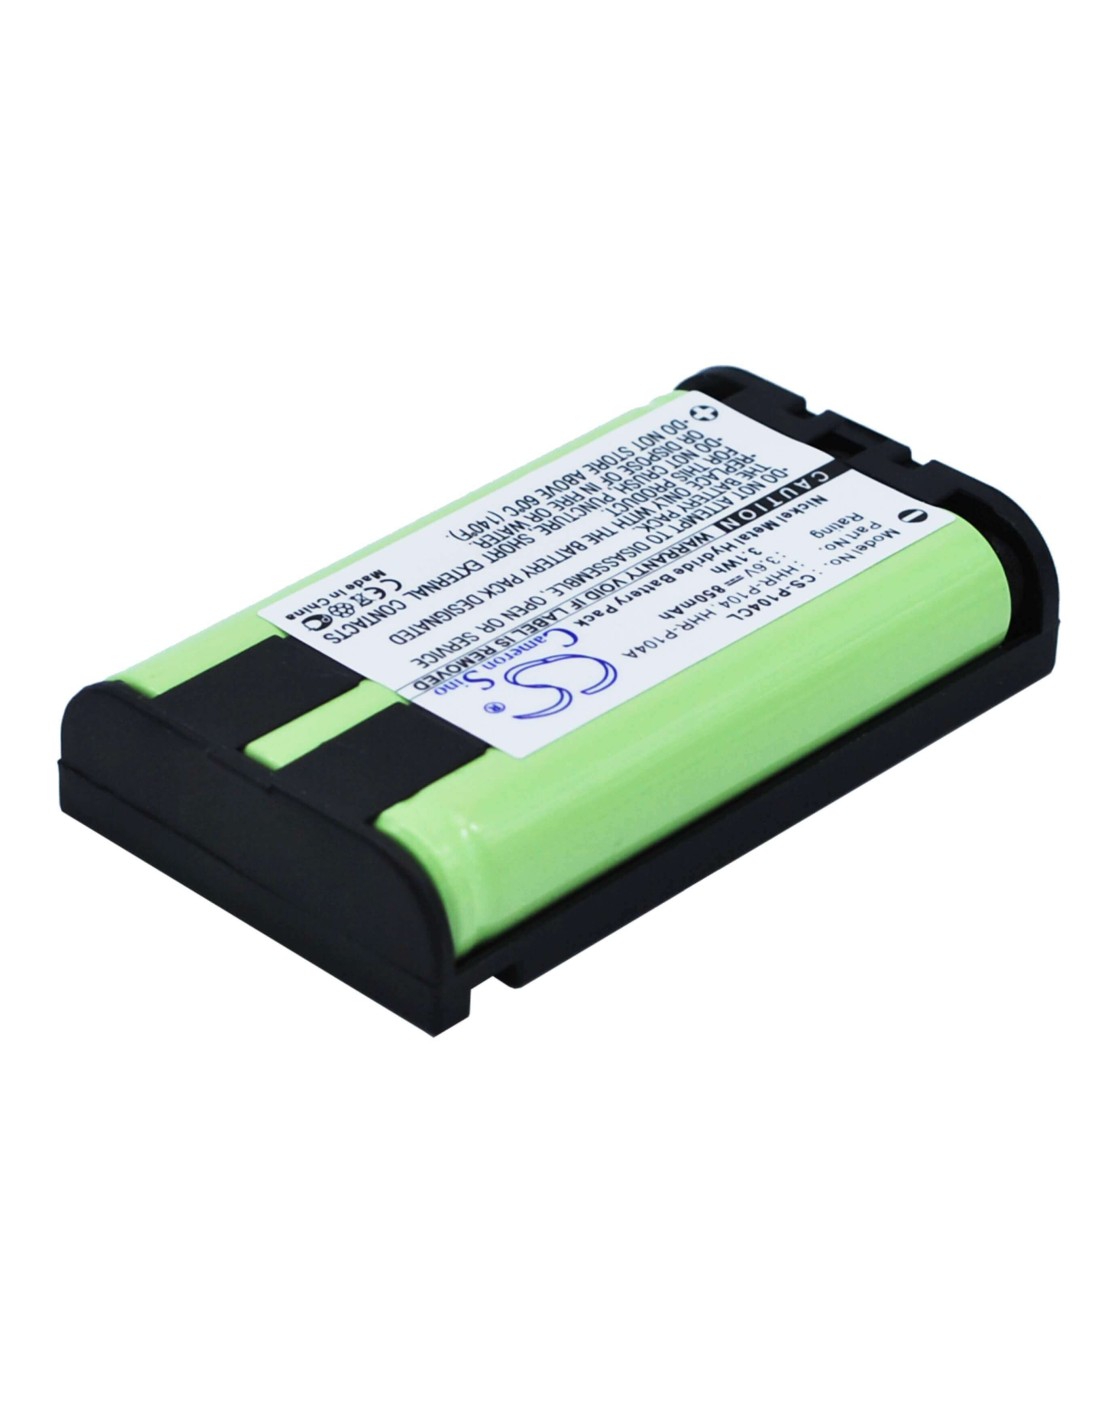 Battery for Ge, Tl26411, Tl86411, Tl96411 3.6V, 850mAh - 3.06Wh